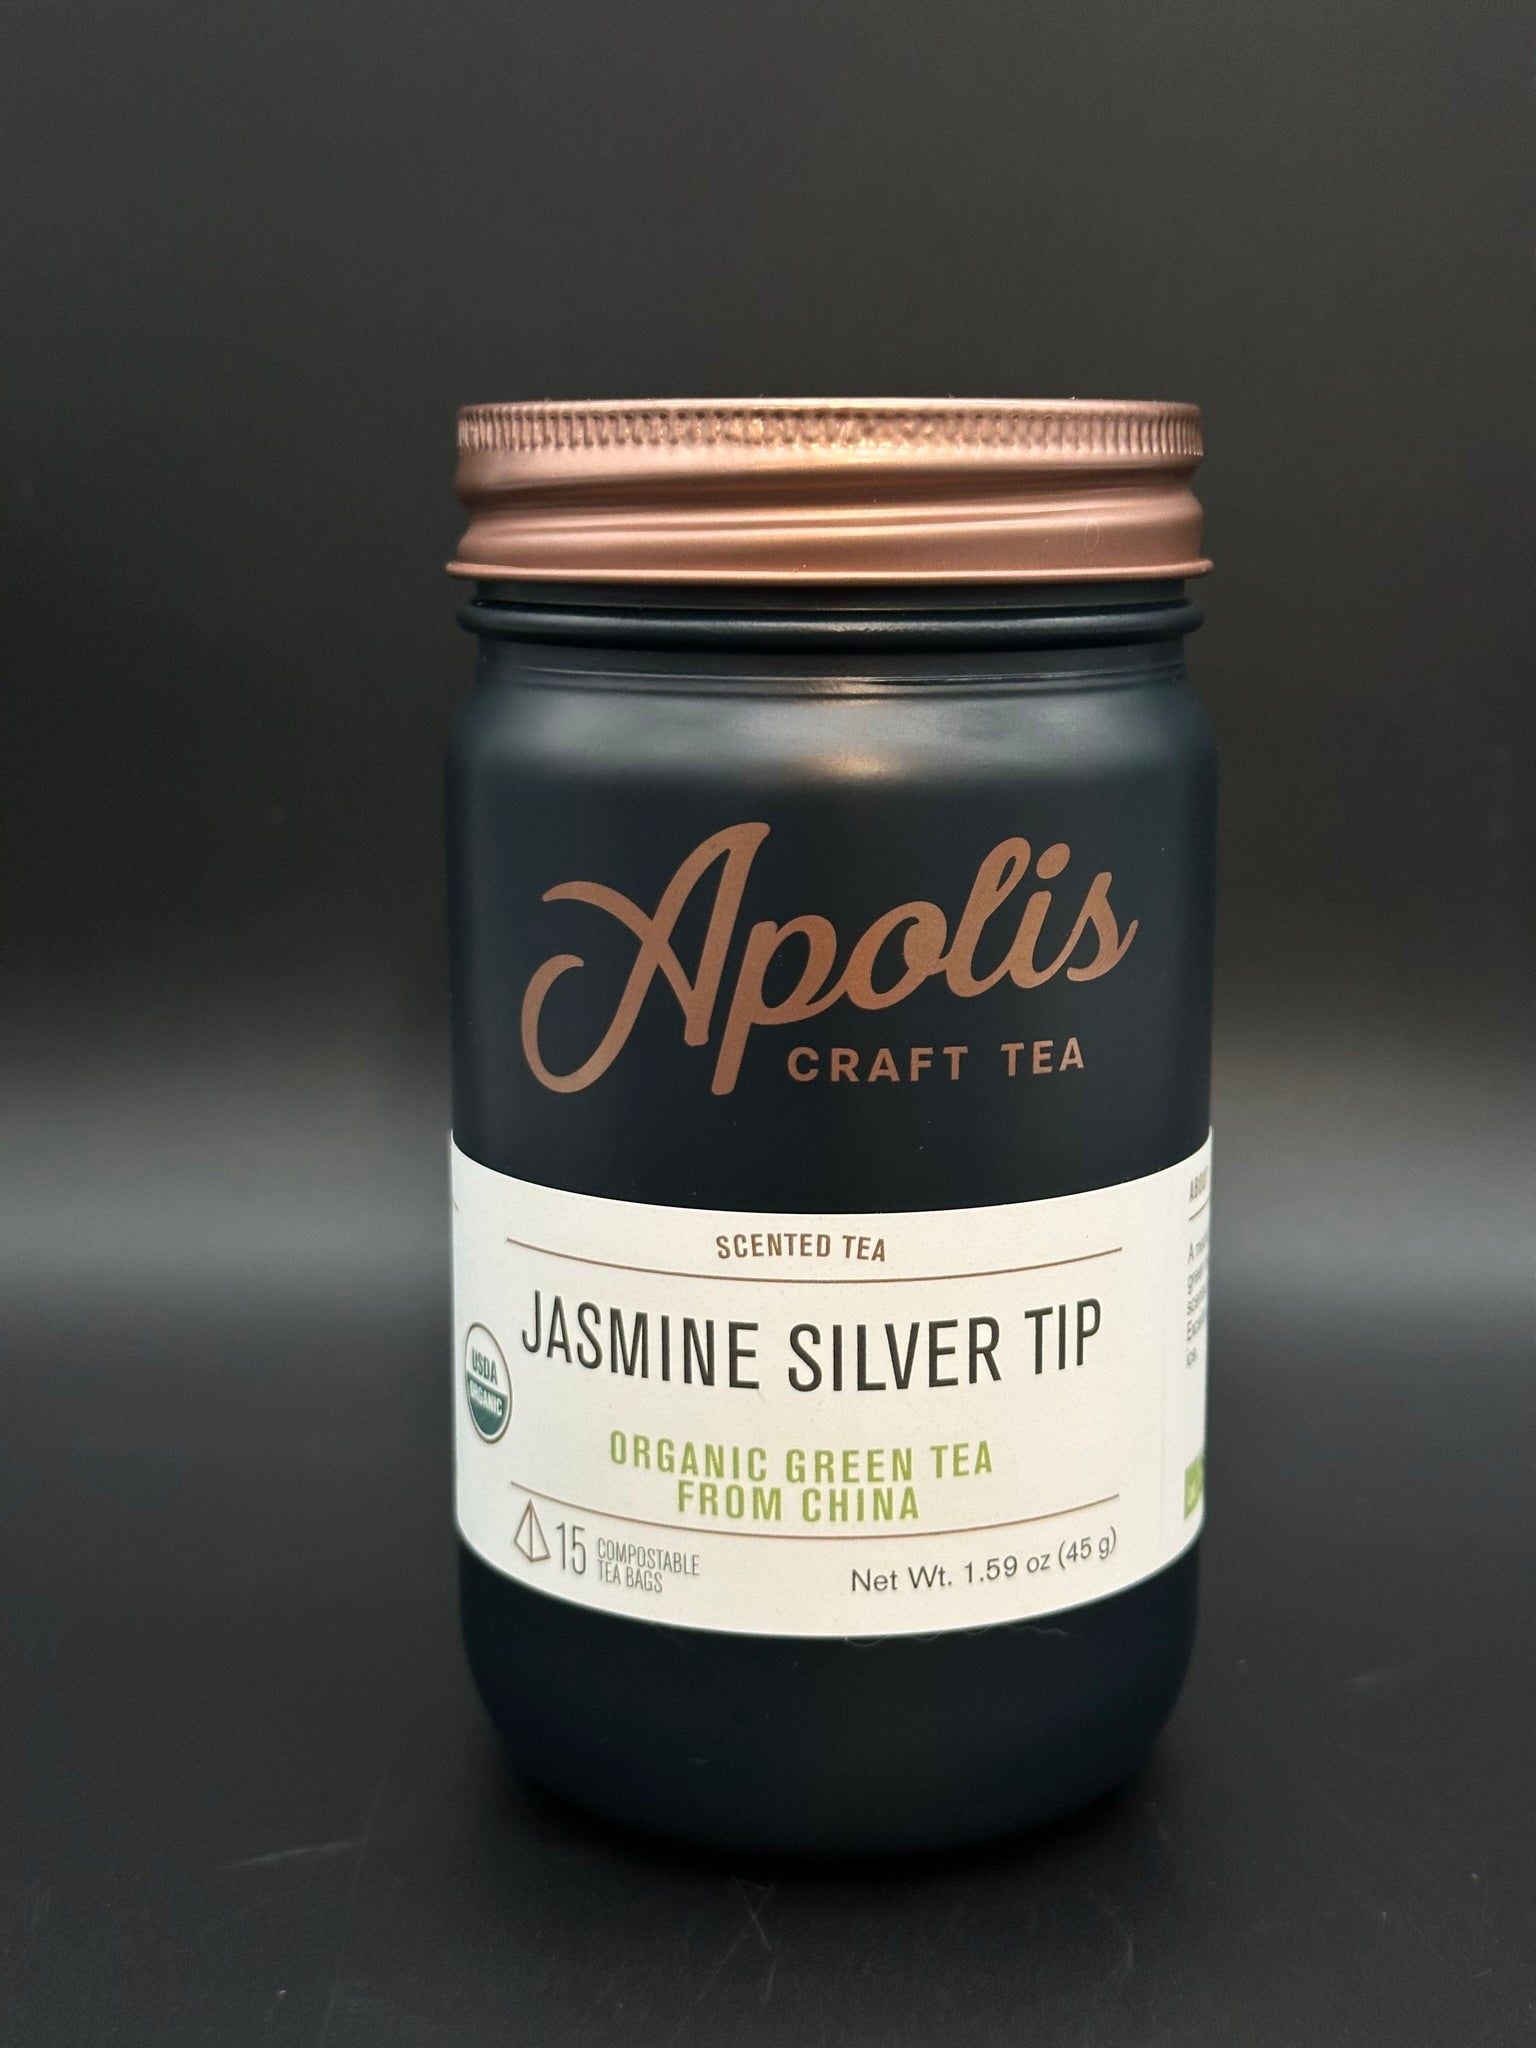 Apolis Craft Tea - Peppermint Tea